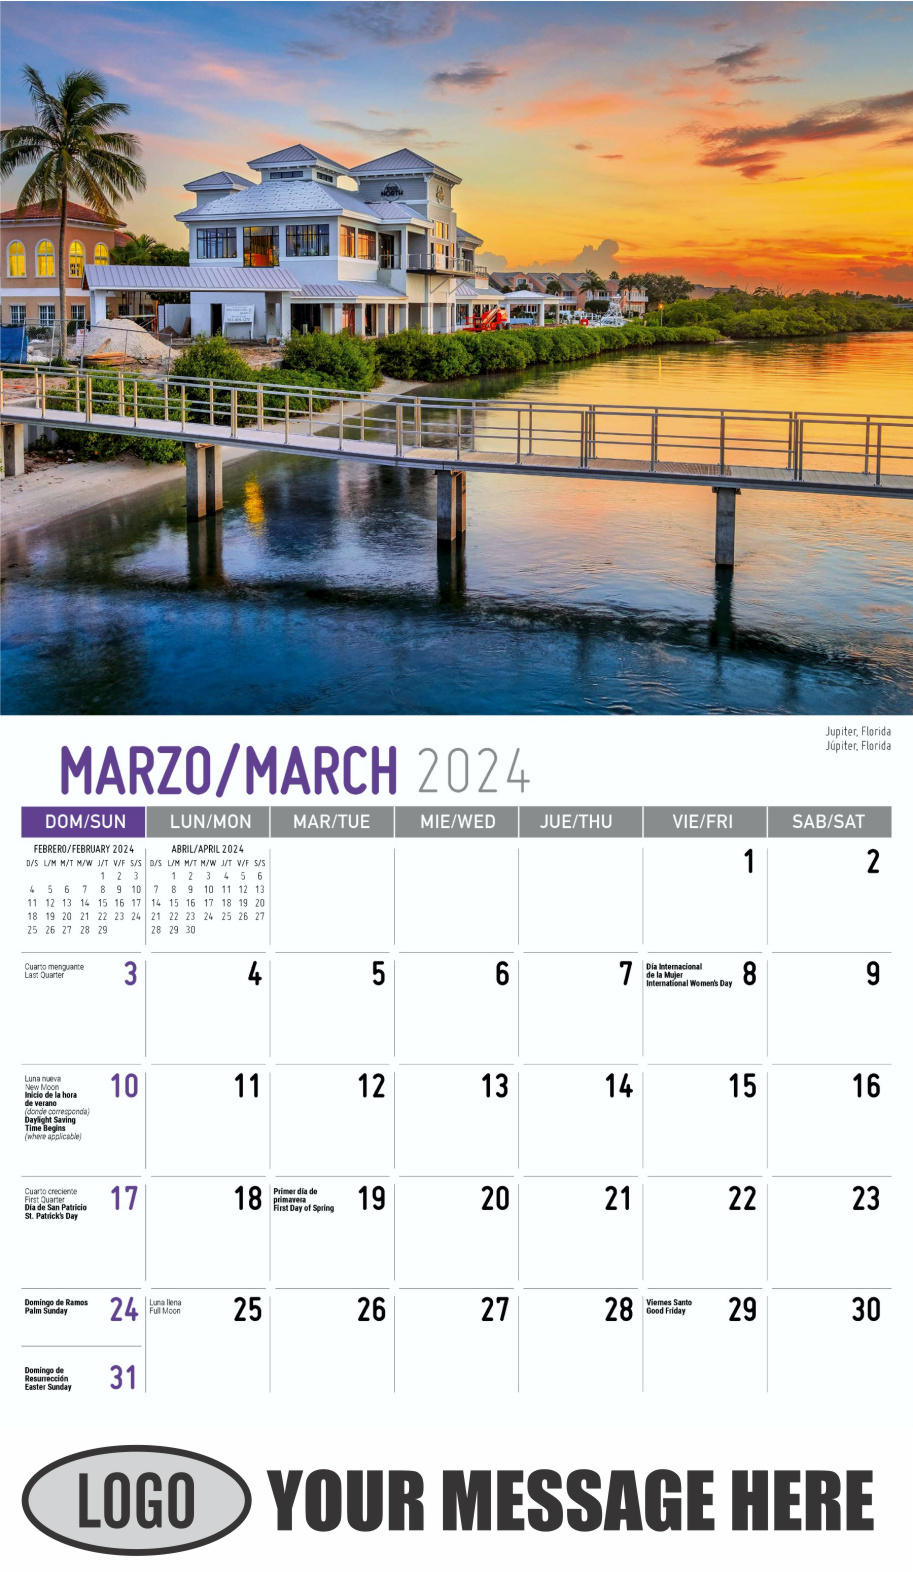 Scenes of America 2024 Bilingual Business Promo Calendar - March